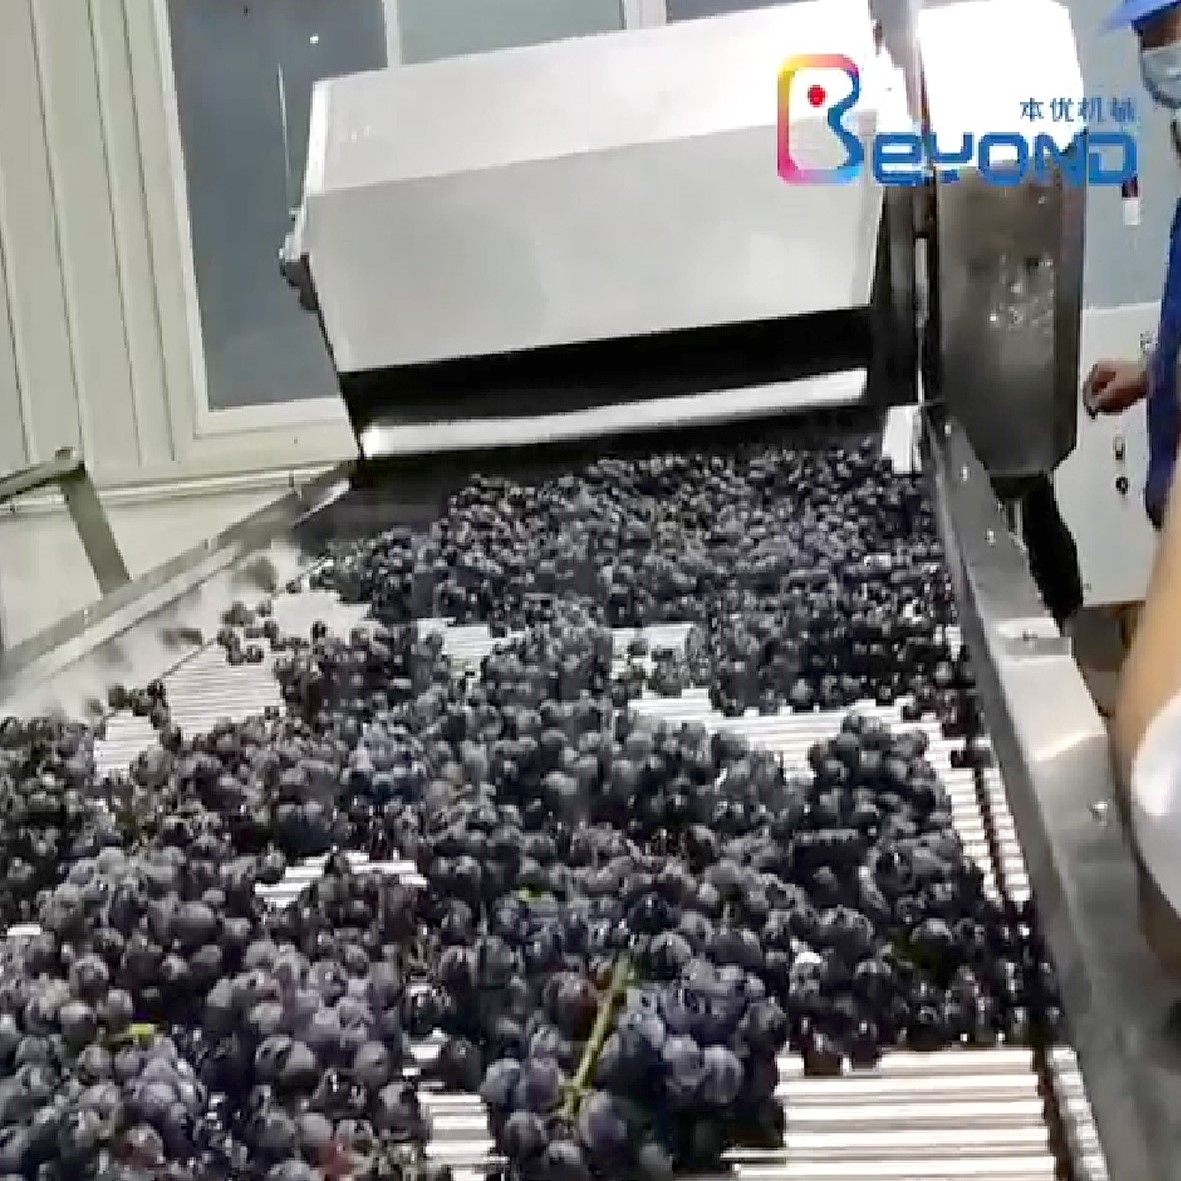 Grape processing plant